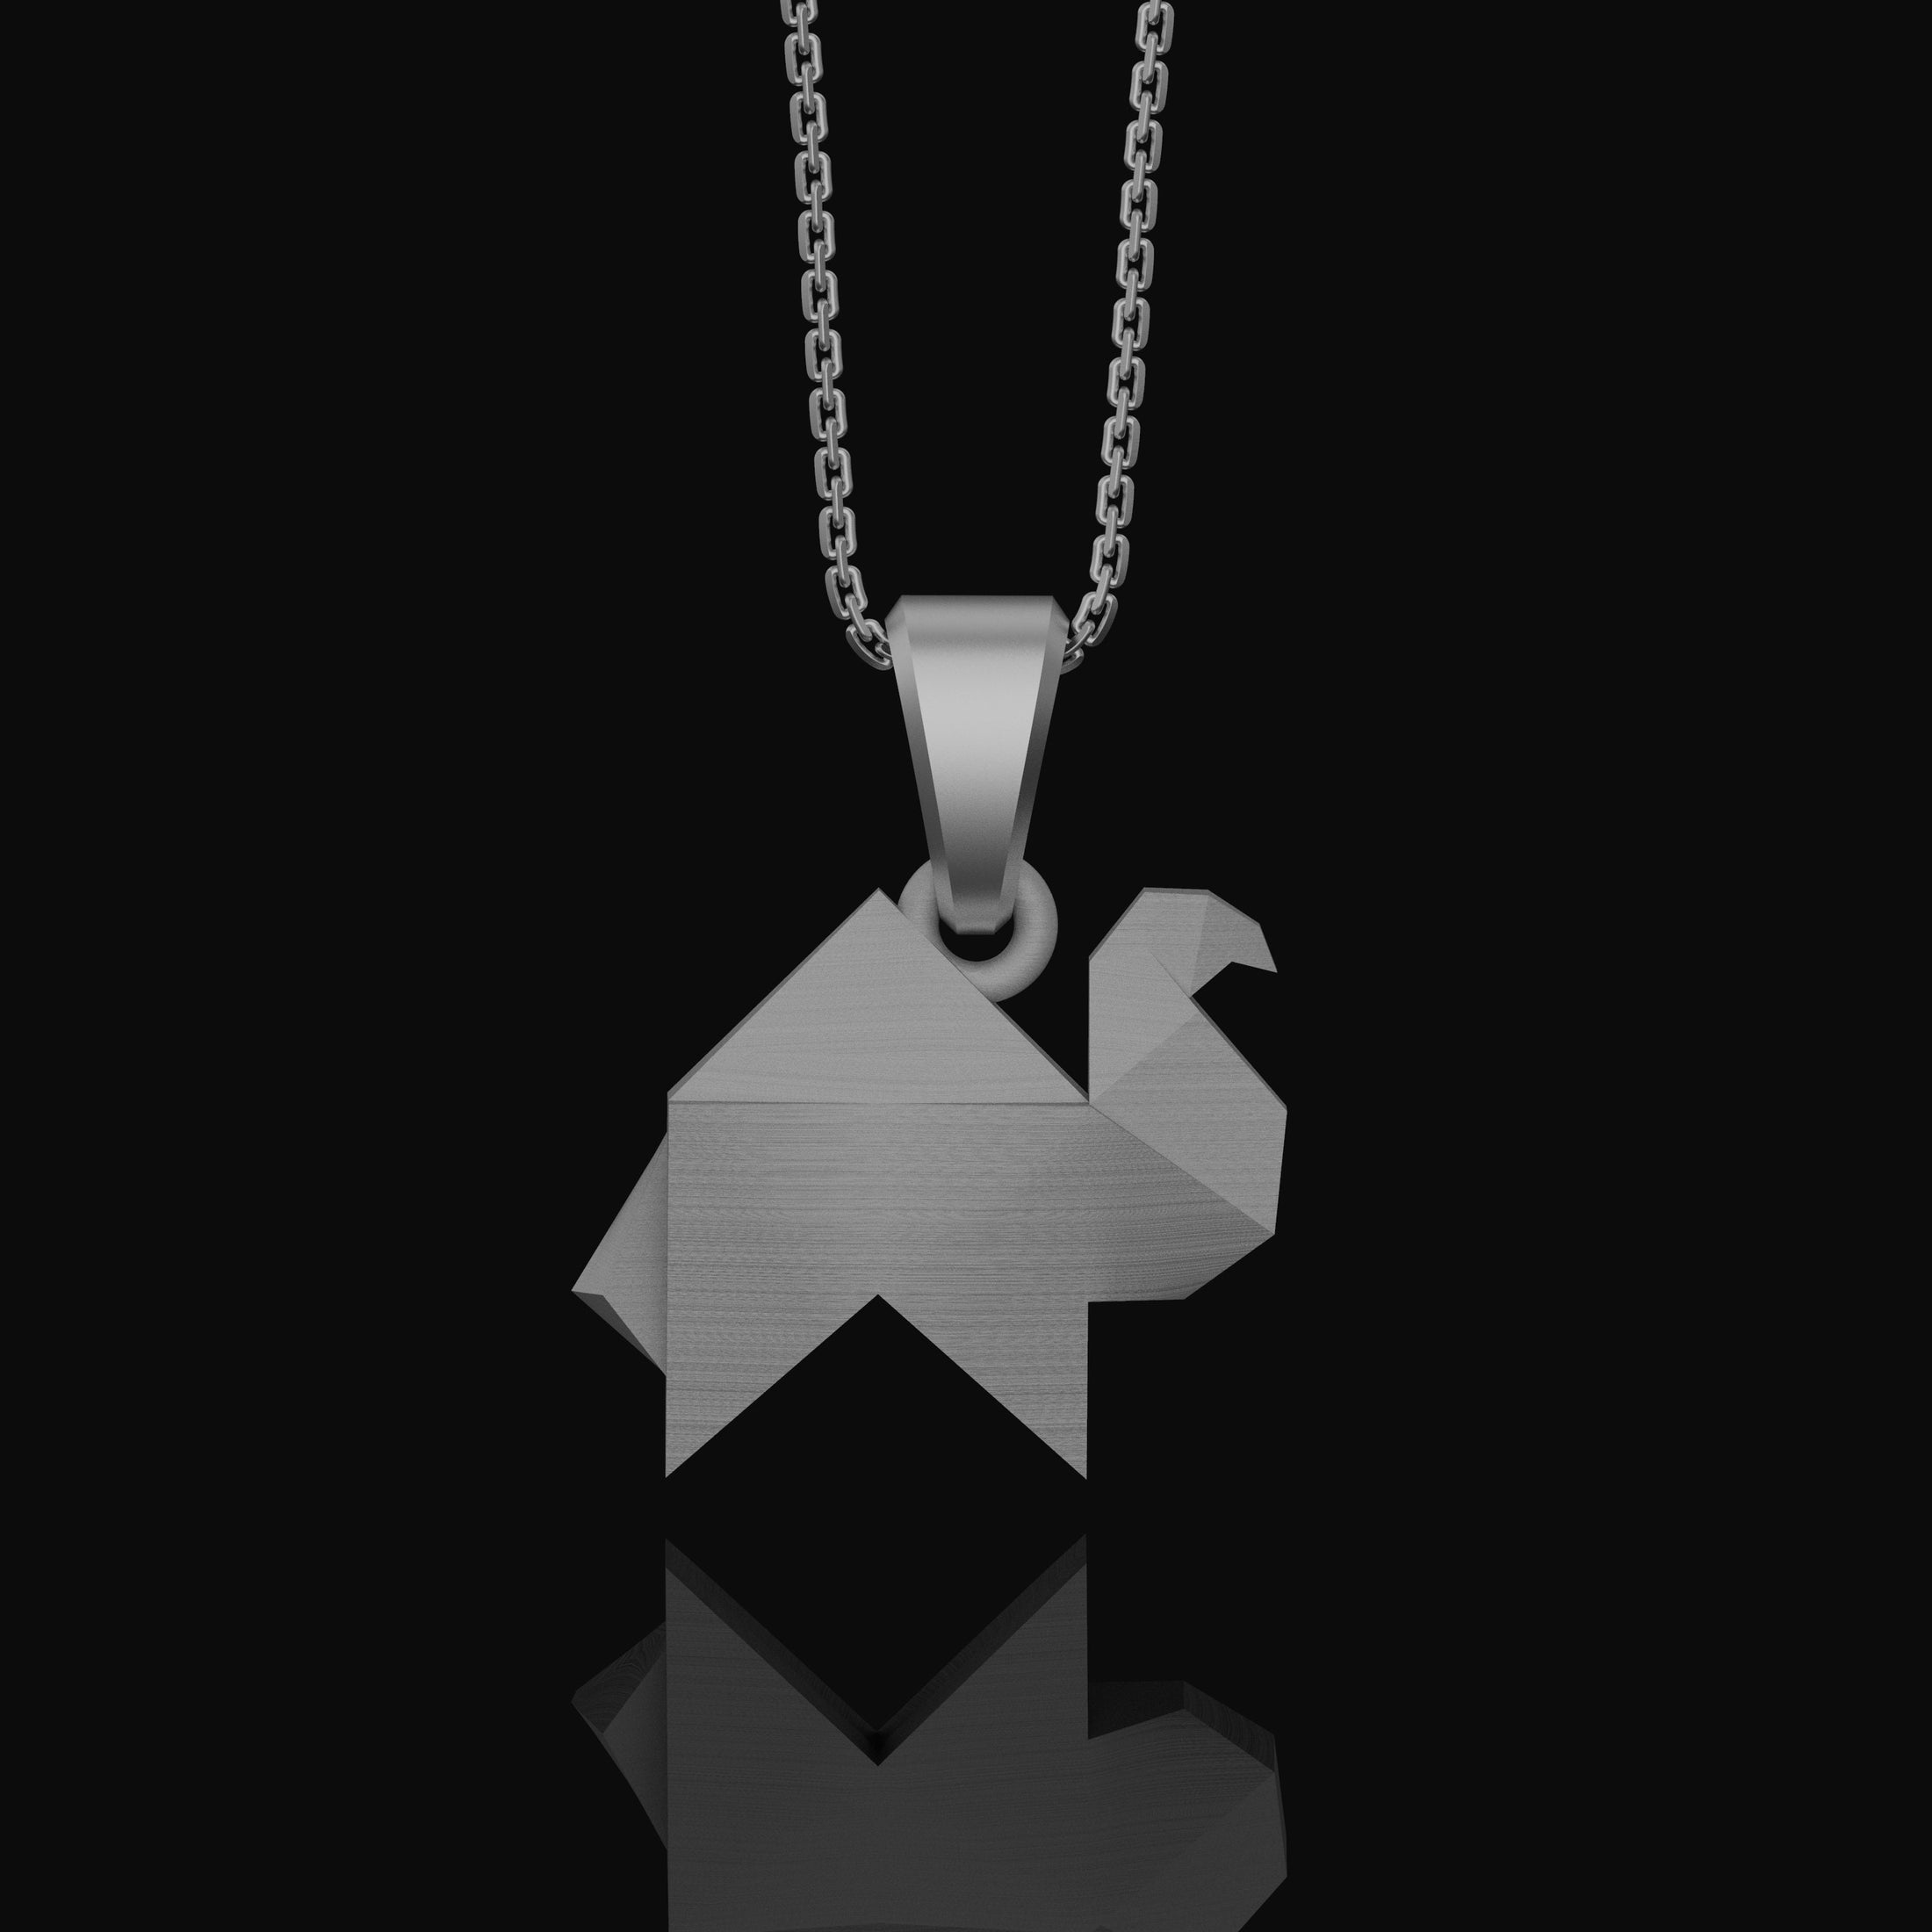 Silver Origami Camel Necklace - Elegant Folded Camel Pendant, Artistic Desert Inspired Jewelry, Unique Chic Safari Style